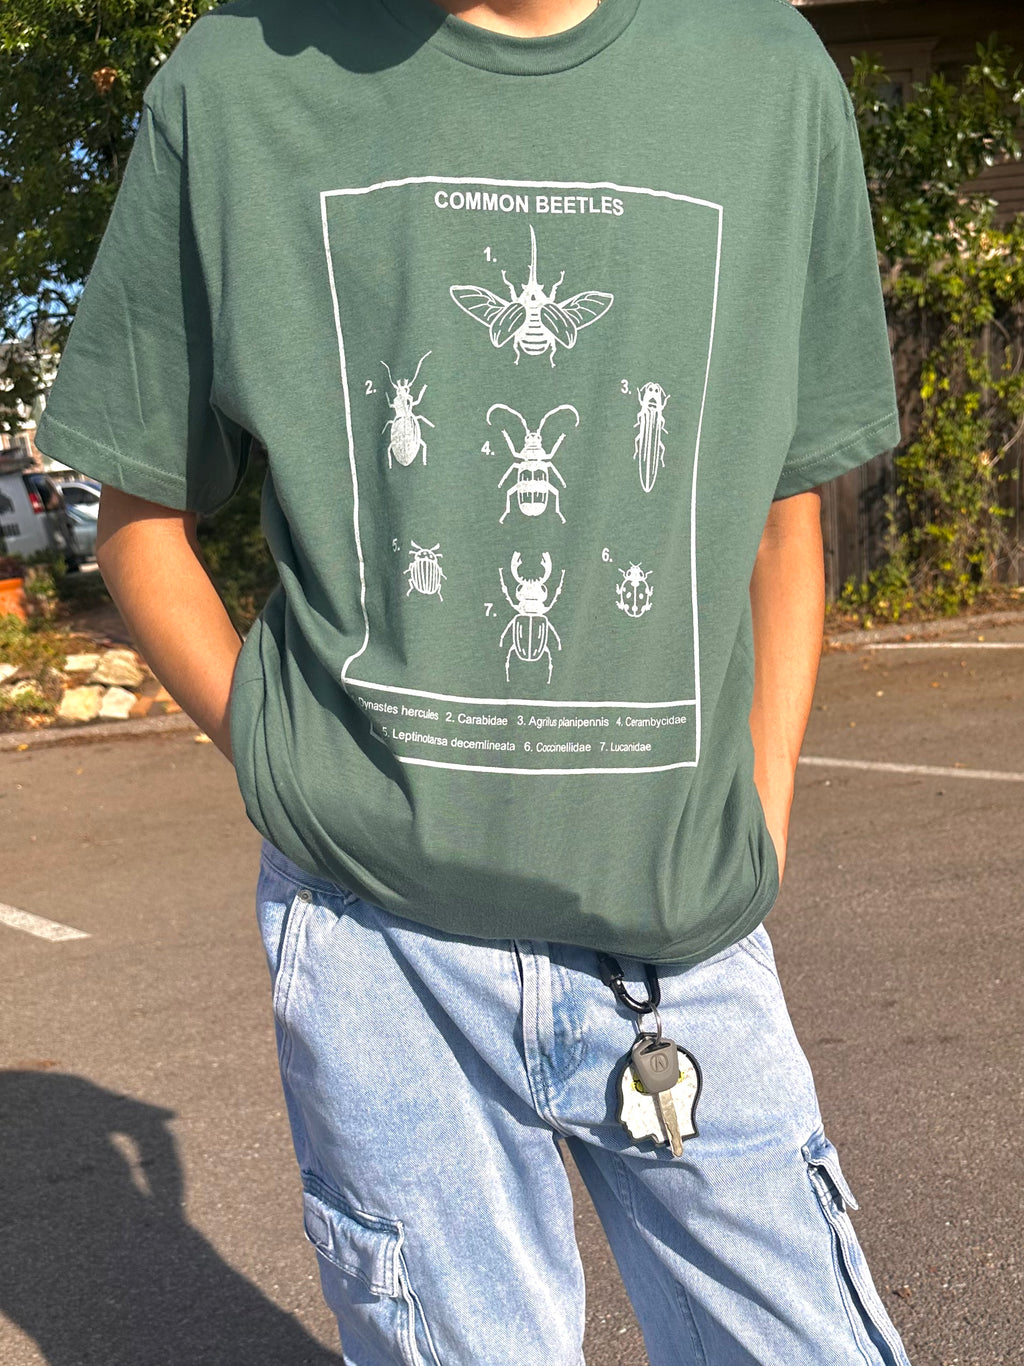 Instectology: Common Beetles